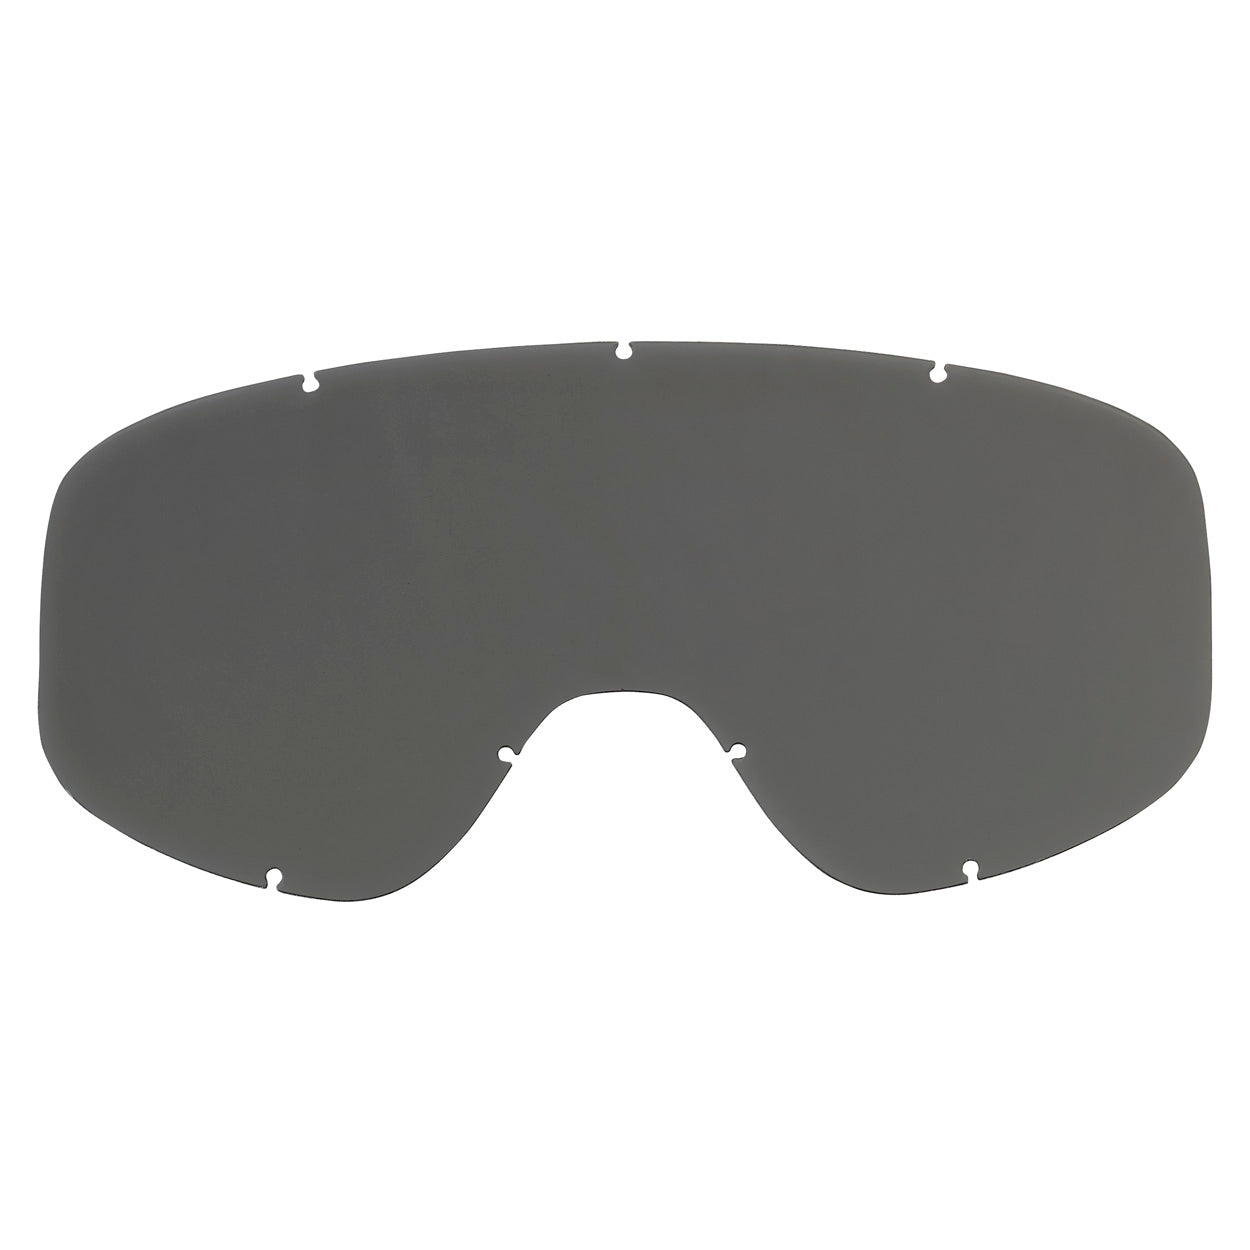 Moto 2.0 Goggle Lens - Smoke